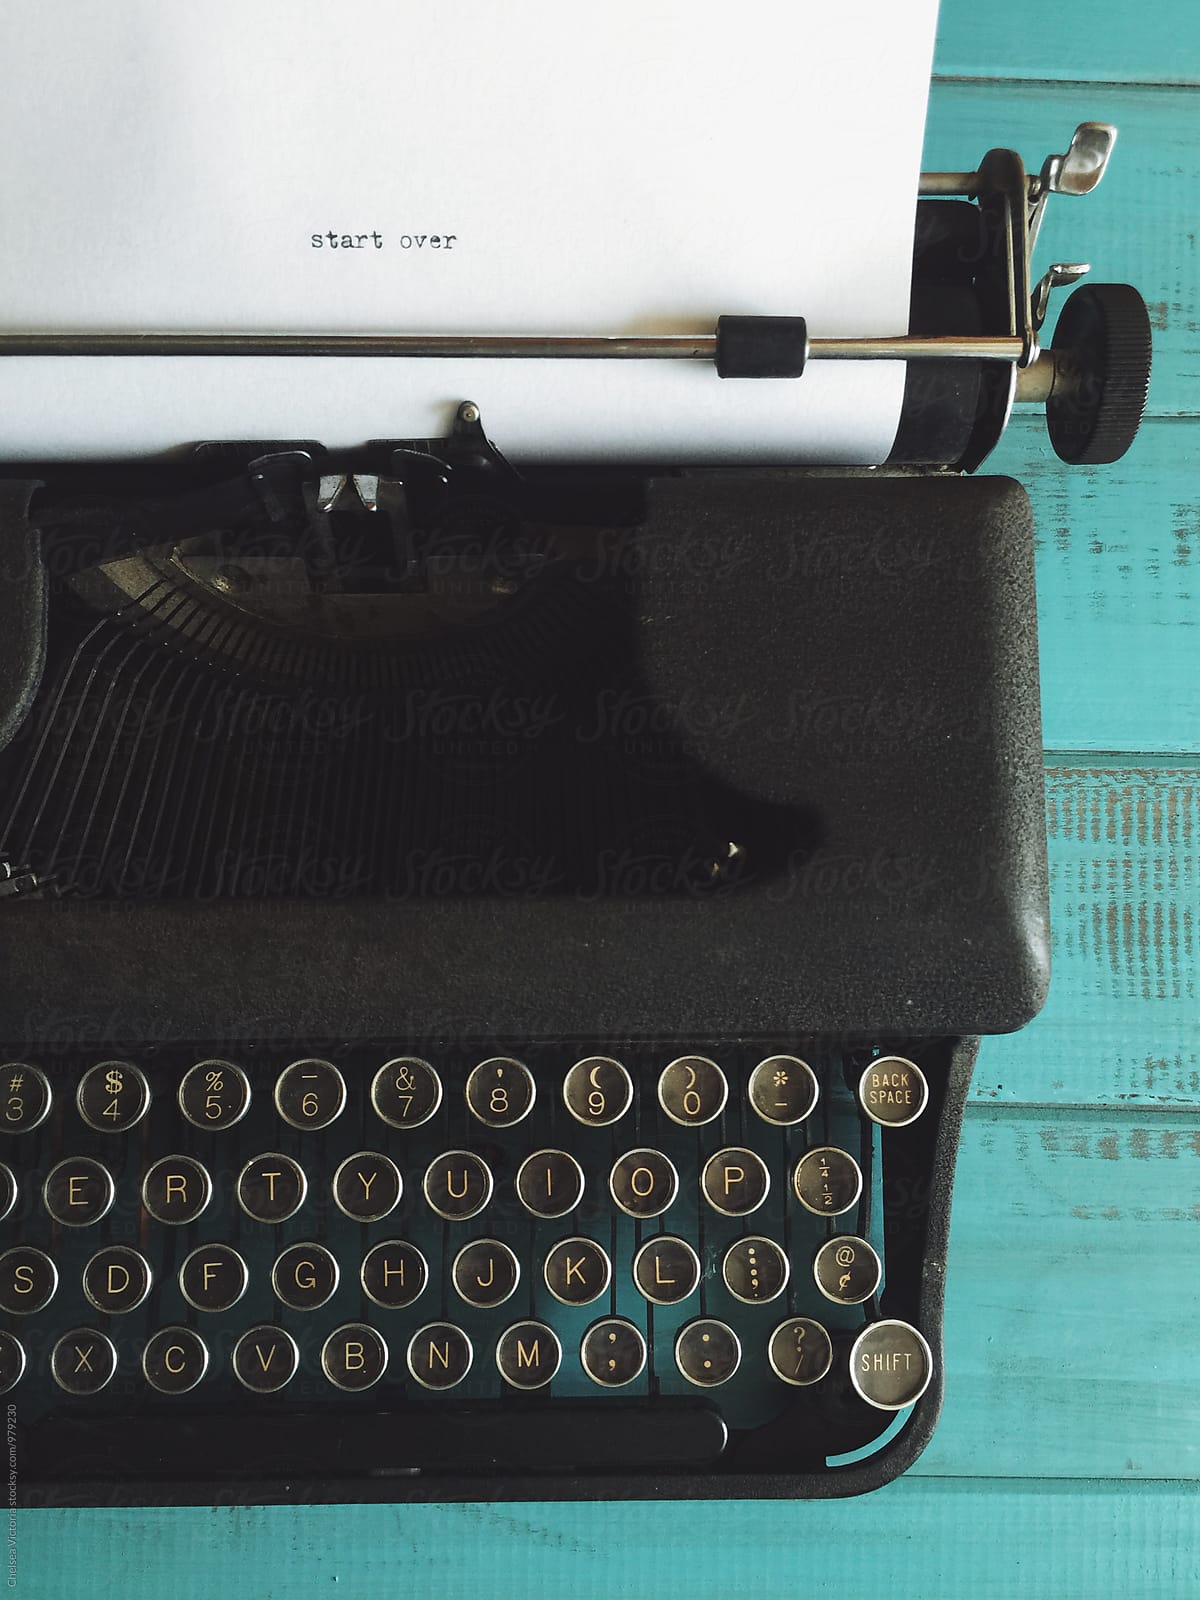 A vintage typewriter that says start over